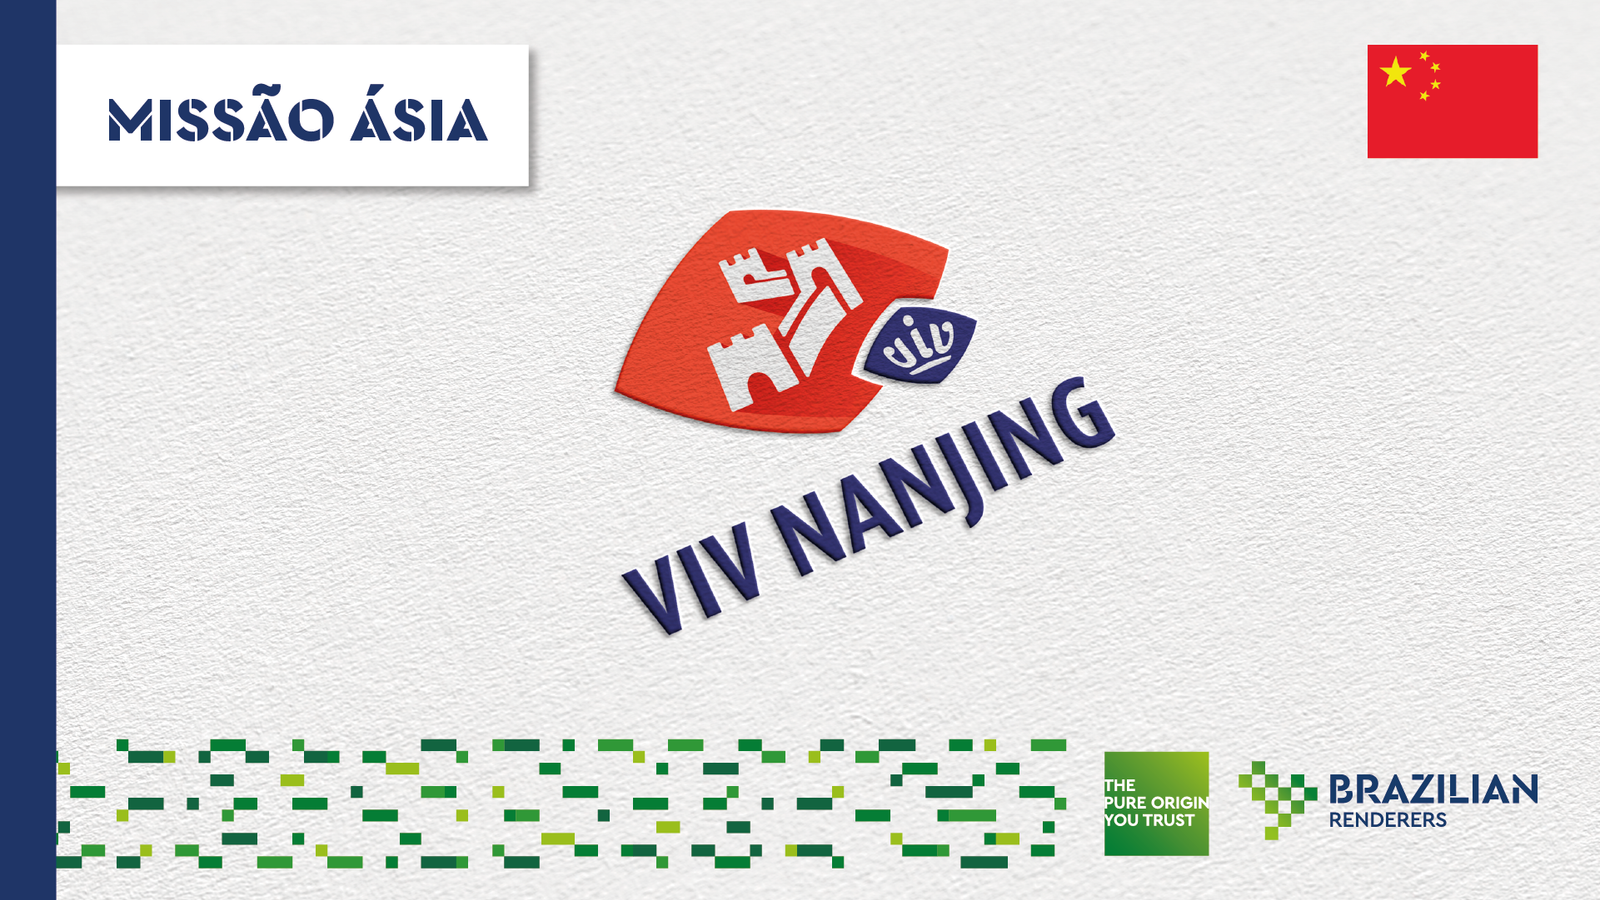 Missão Ásia: Brazilian Renderers participa da VIV Nanjing, na China